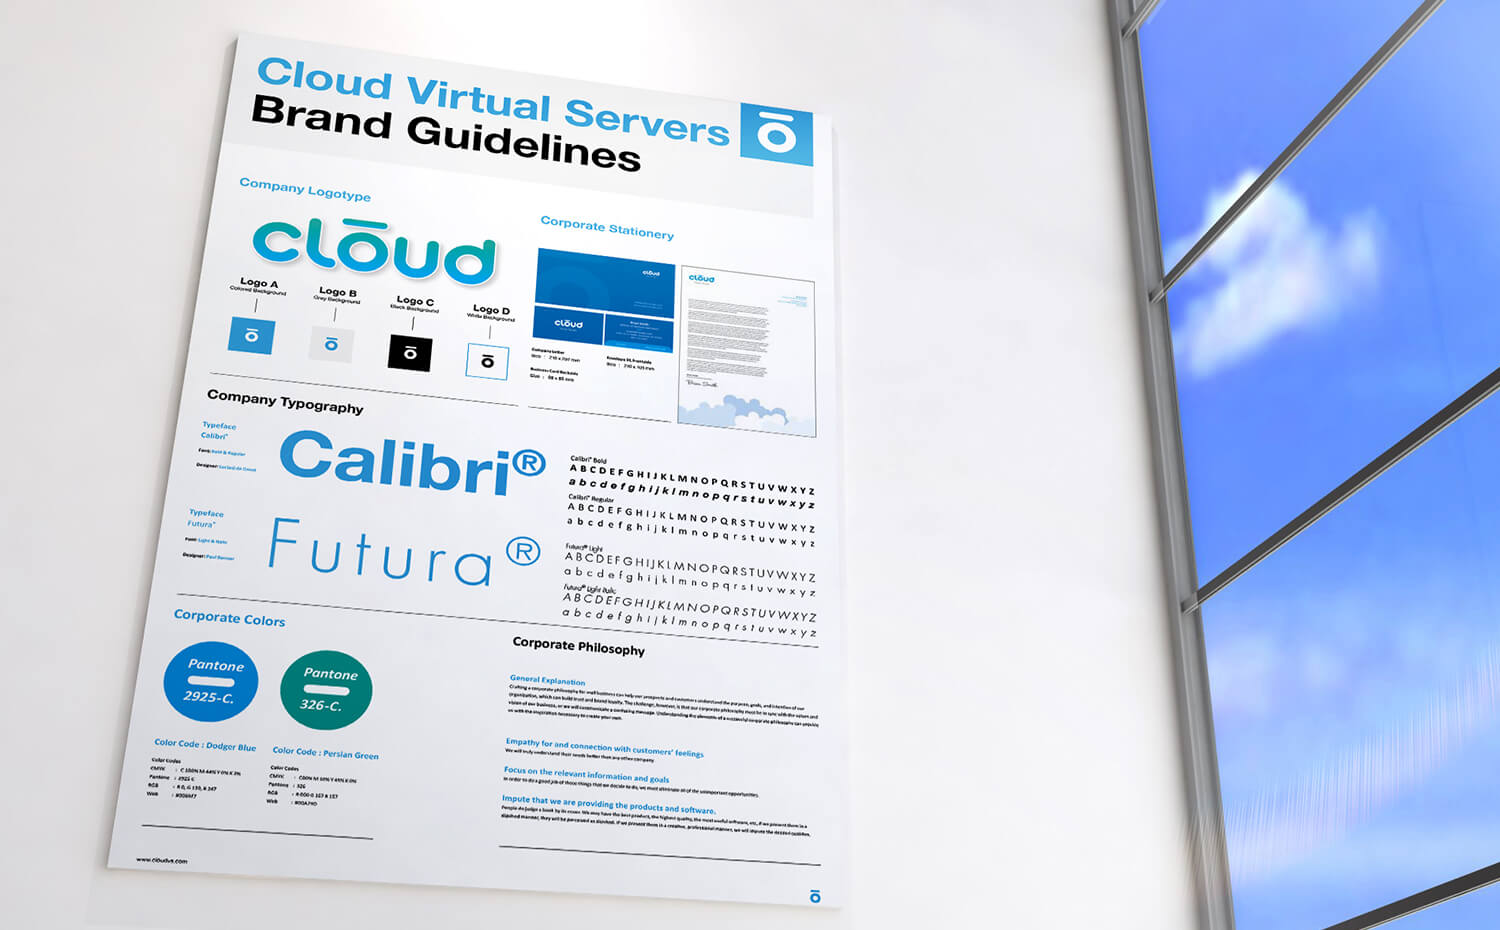 cloud virtual servers - Branded Poster